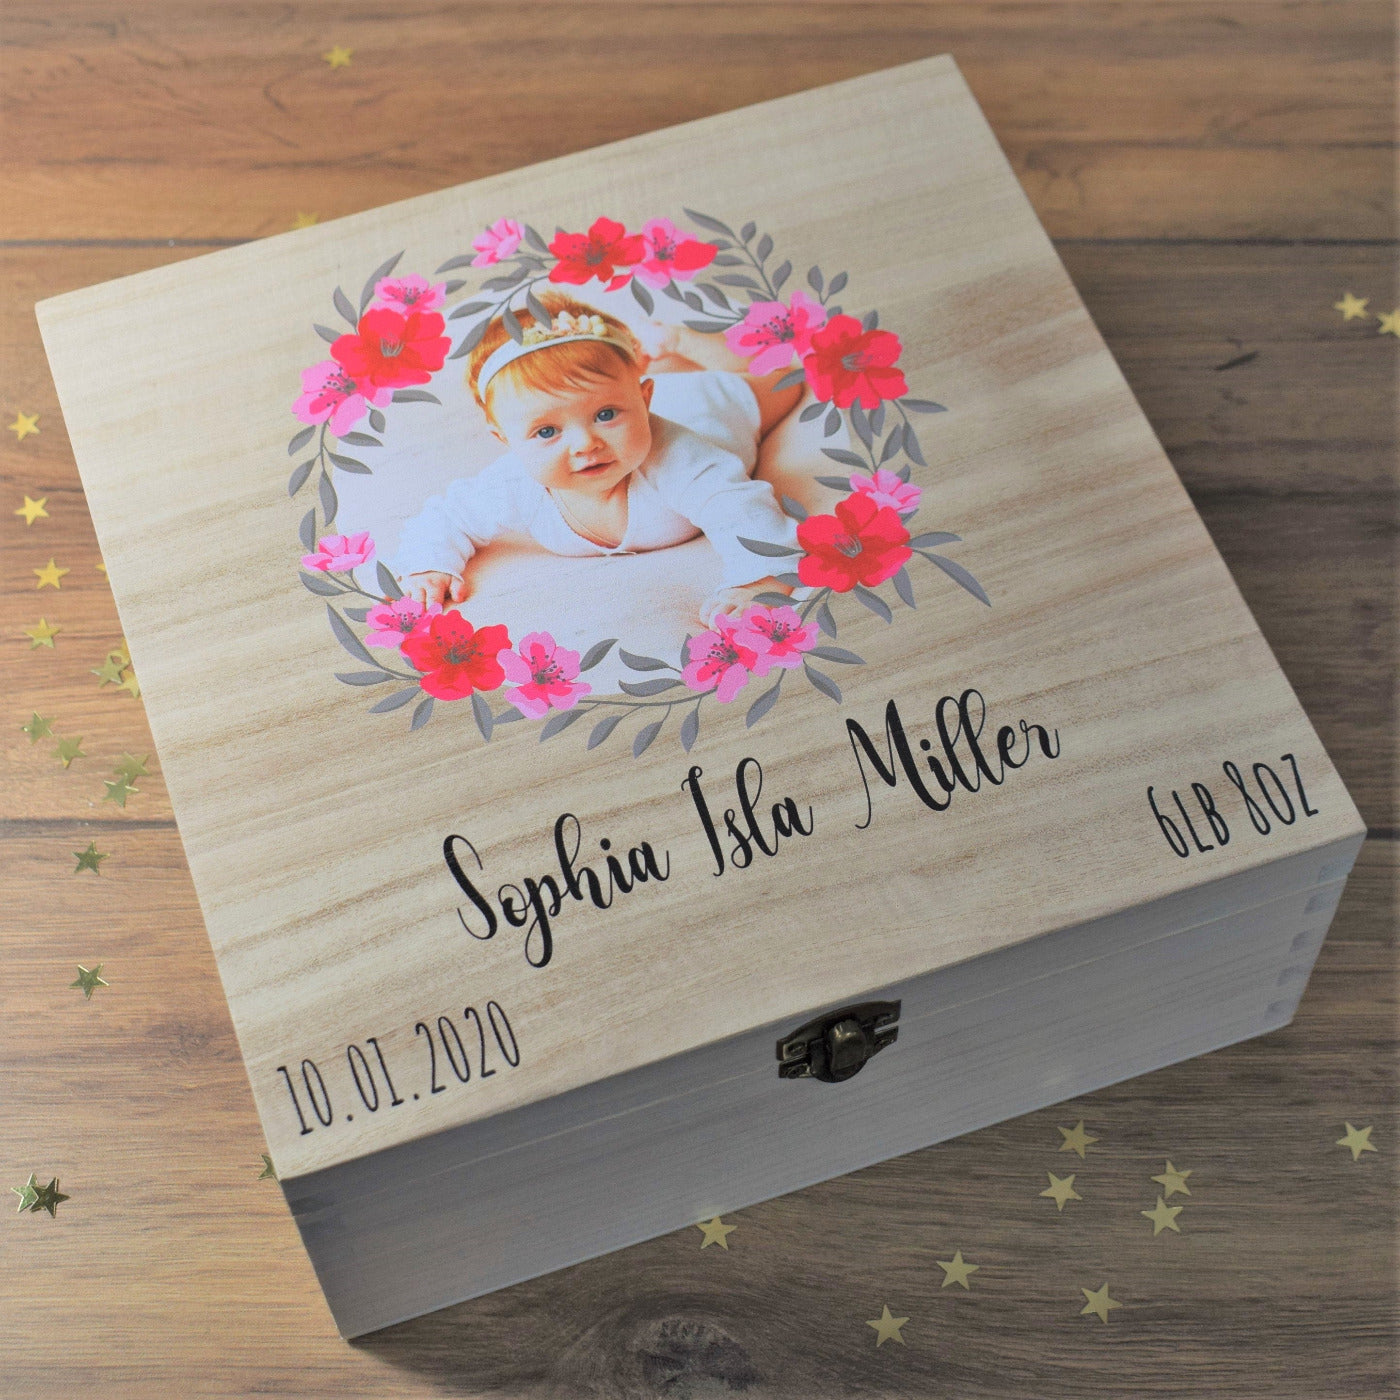 Personalised Photo Printed Wooden Keepsake Box - New Baby Girl & Pink Wreath